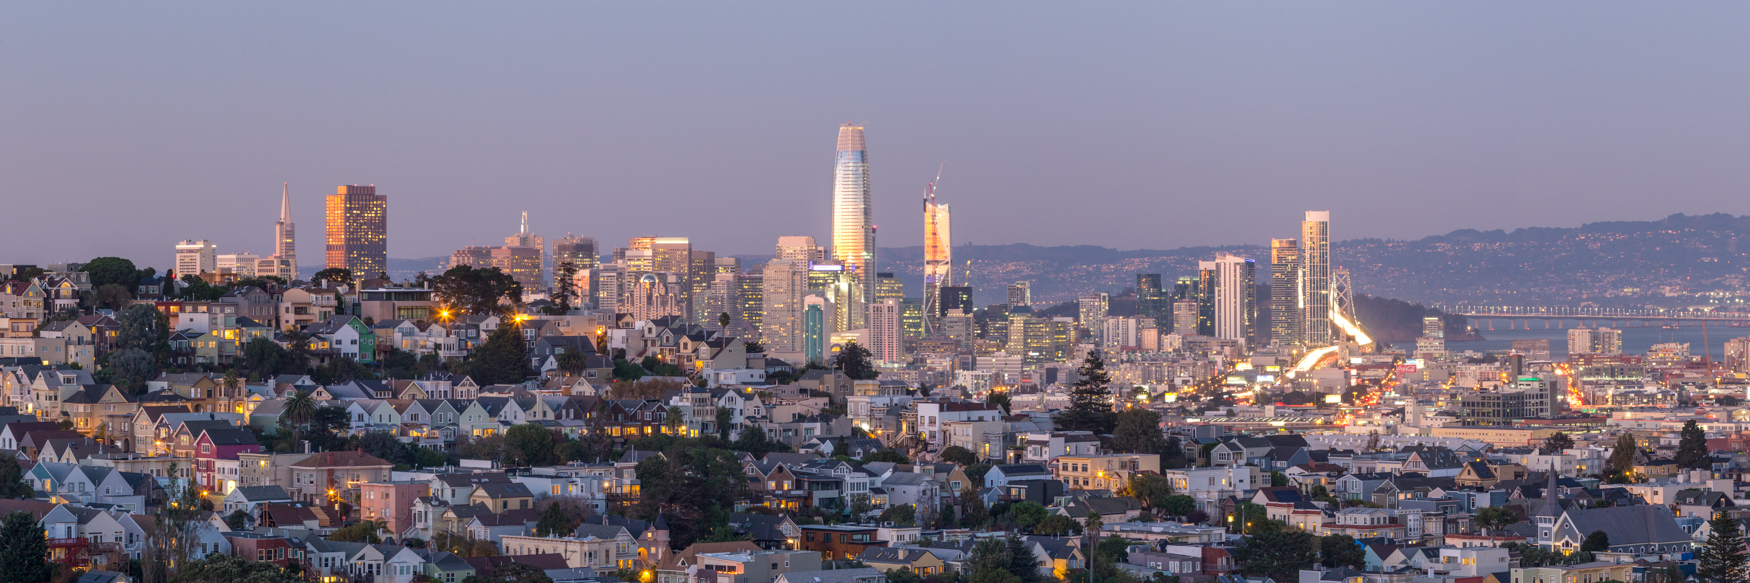 SAN FRANCISCO TWILIGHT VIEW Panorama